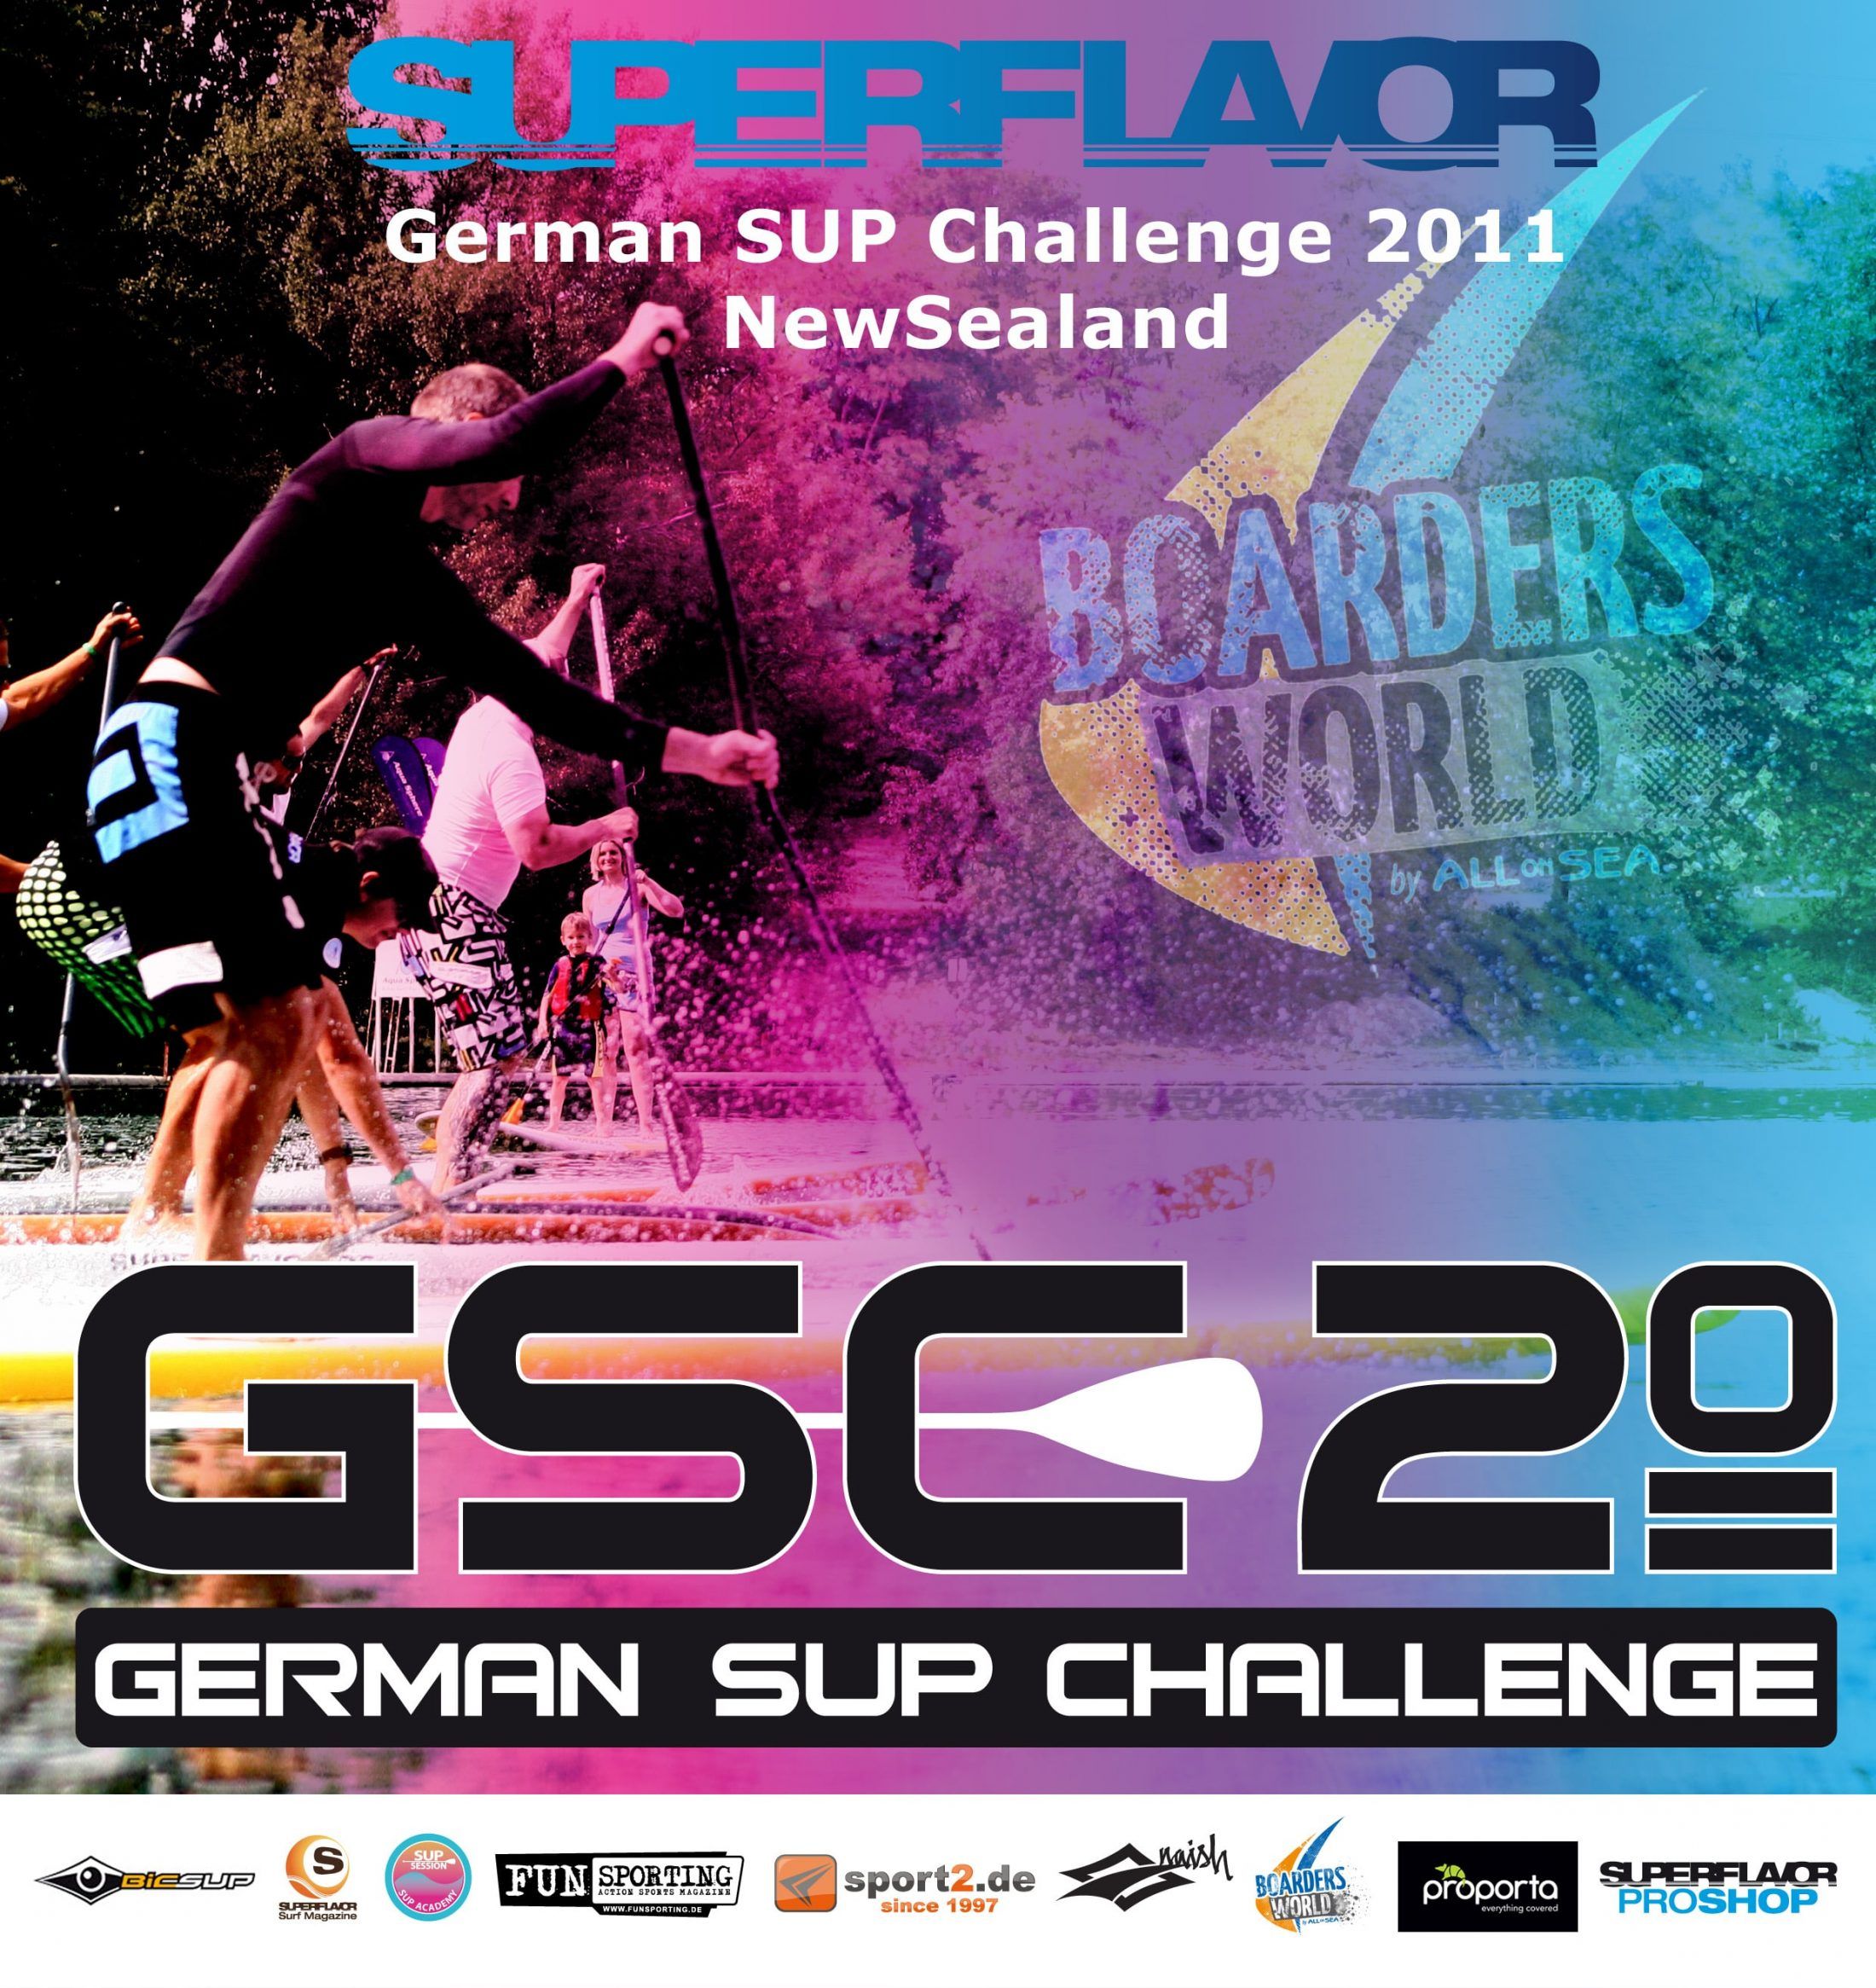 newsealand german sup challenge flyer